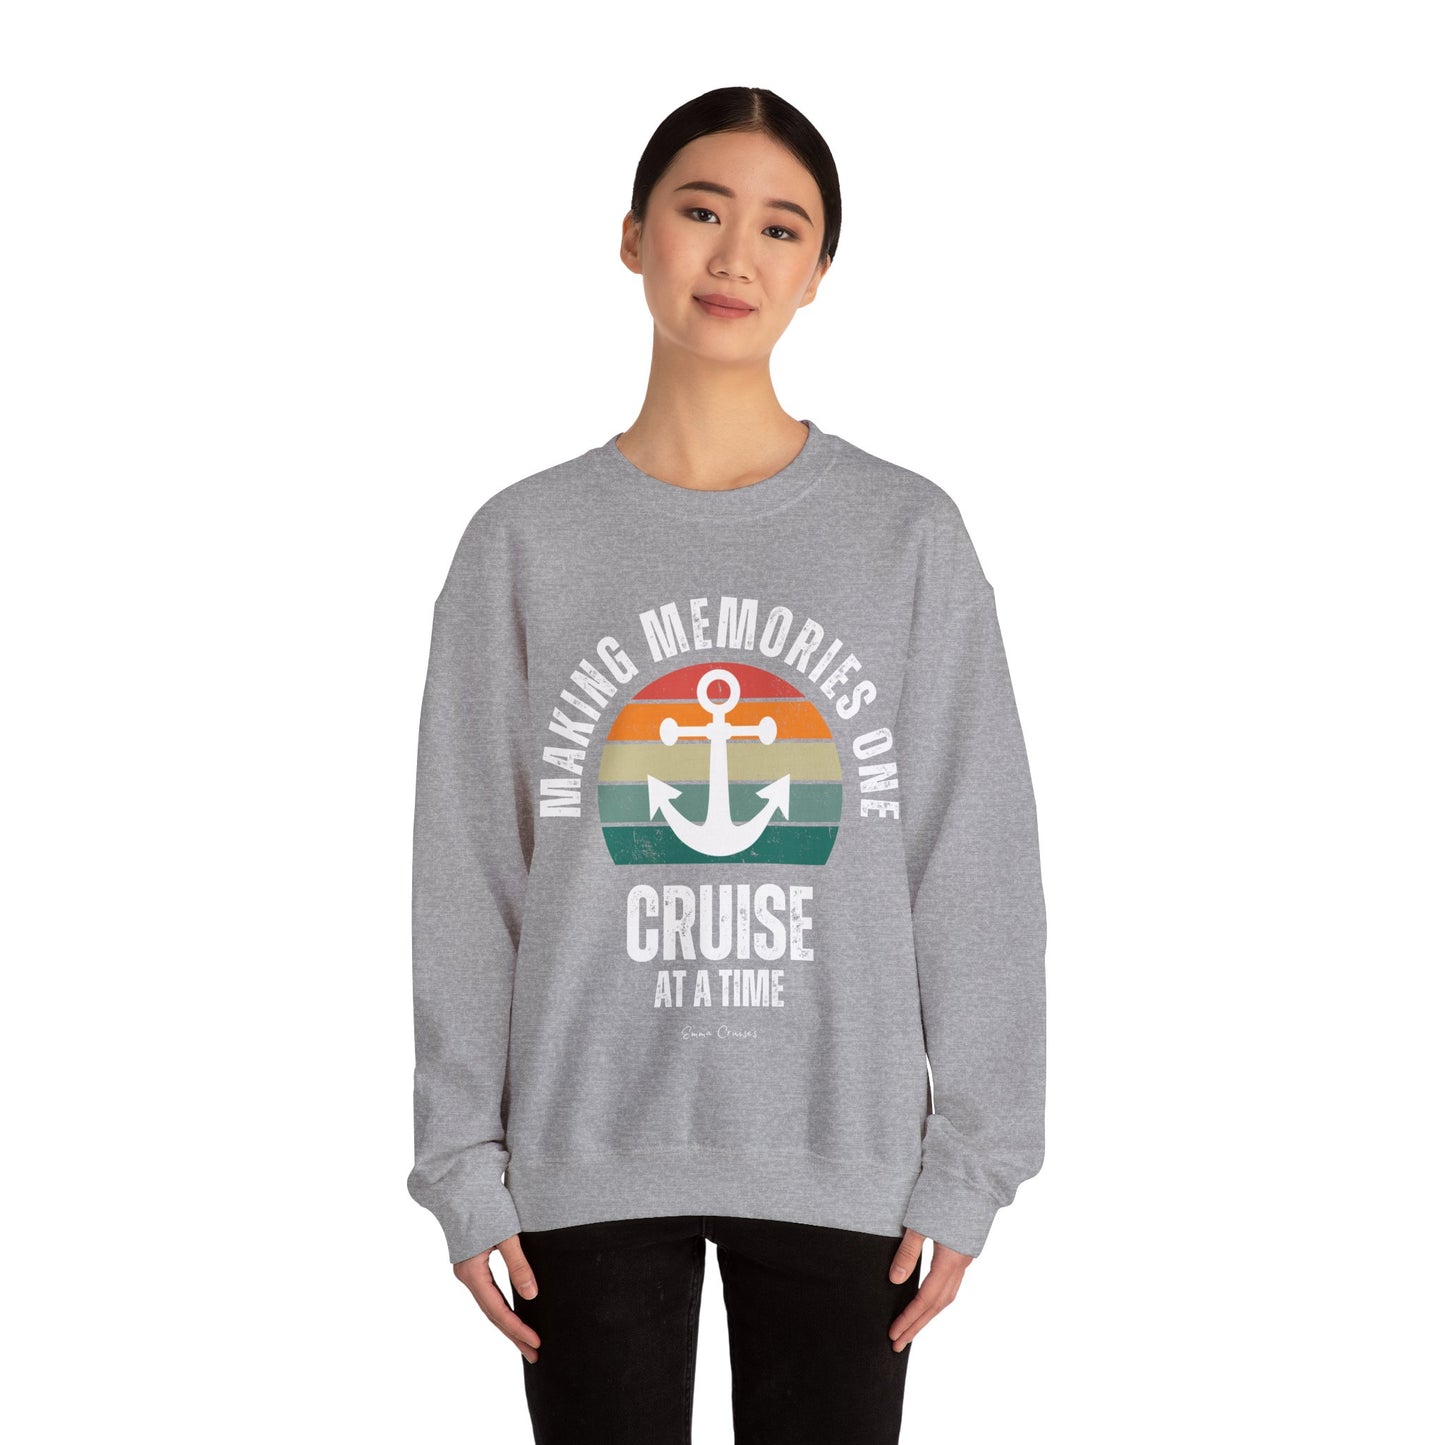 Making Memories One Cruise at a Time - UNISEX Crewneck Sweatshirt